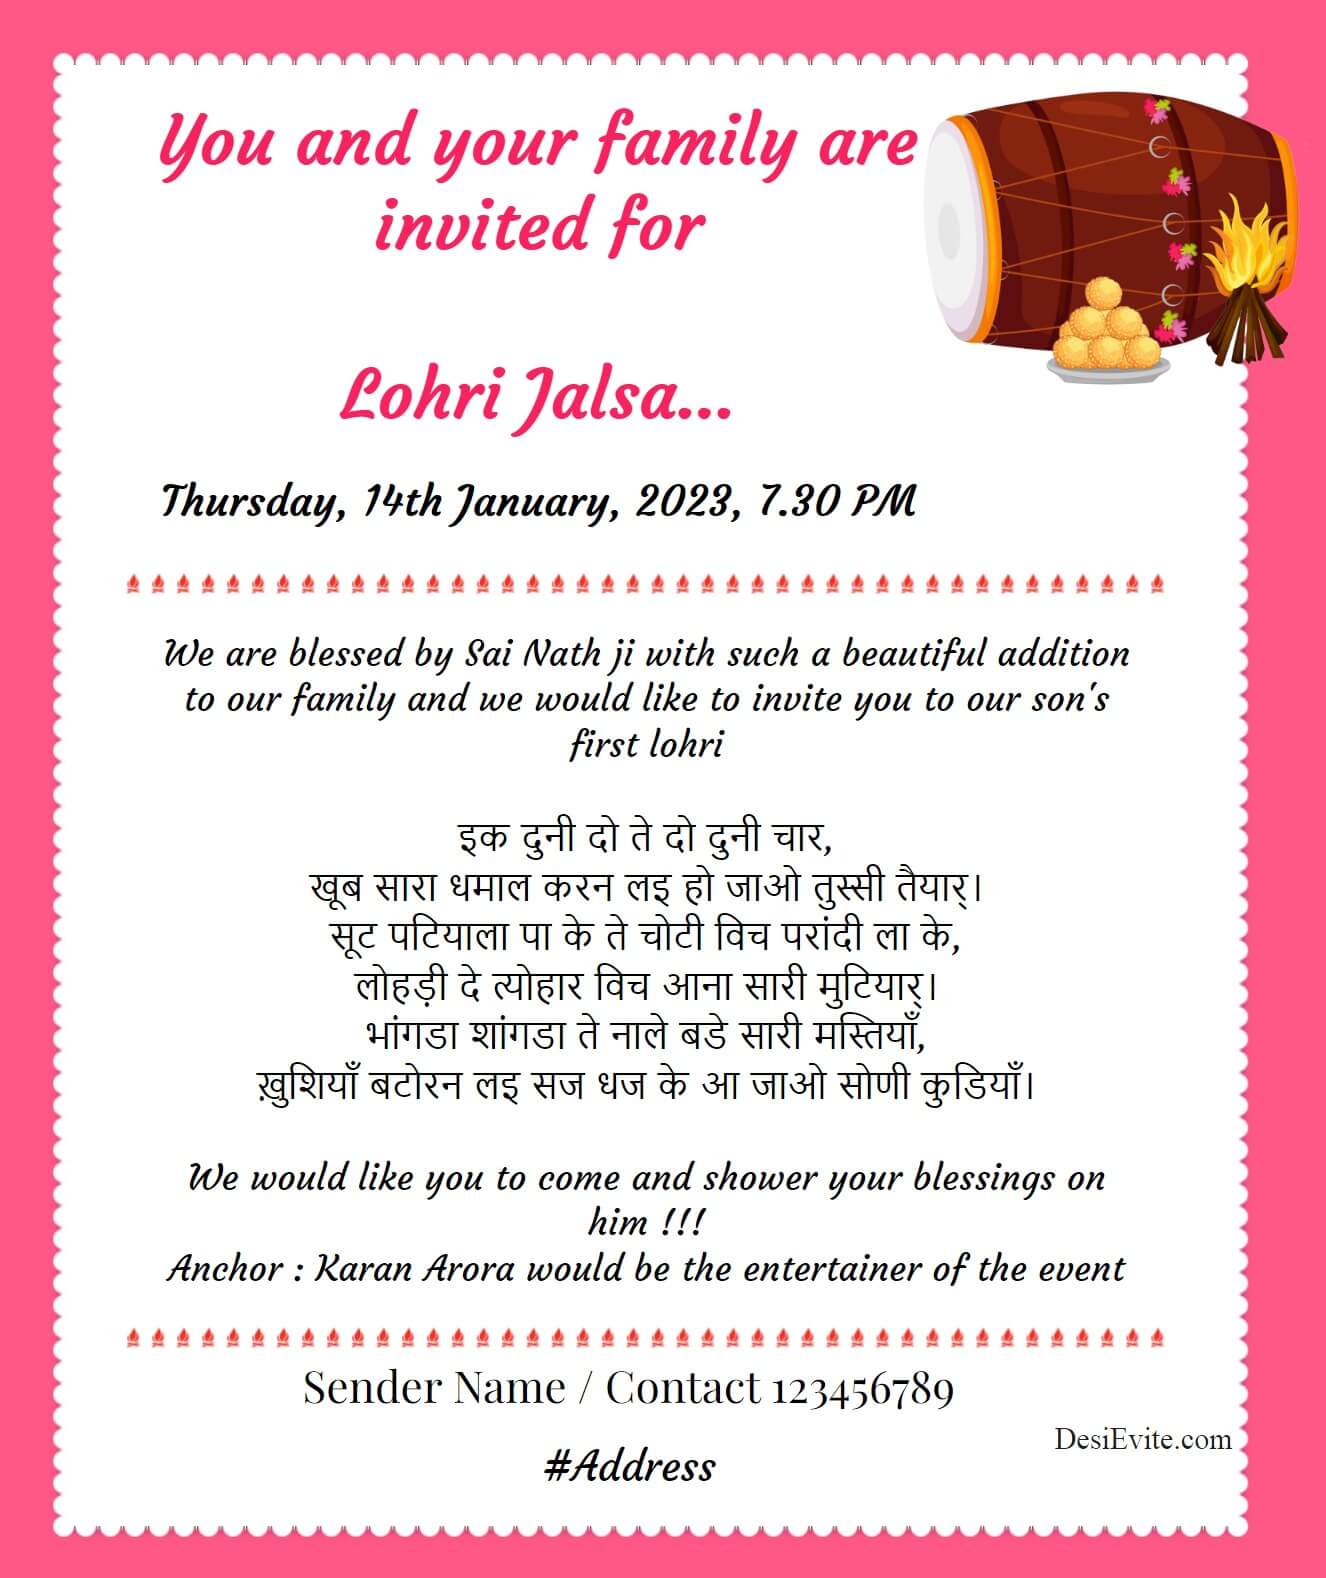 Lohri Jalsa Celebration invitation ecard maker 